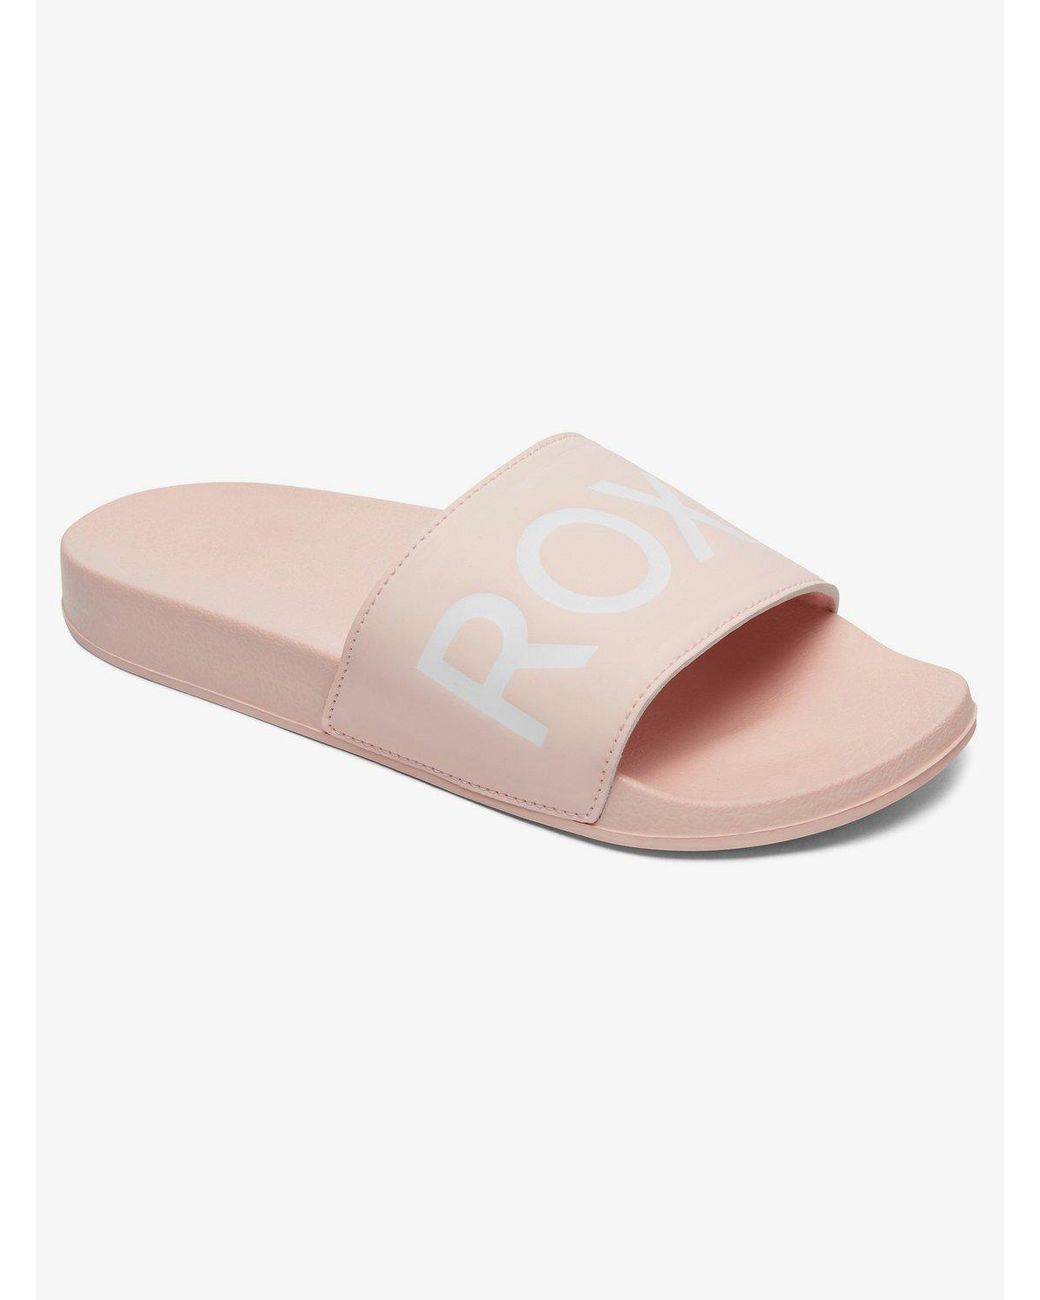 roxy rachelle sandals